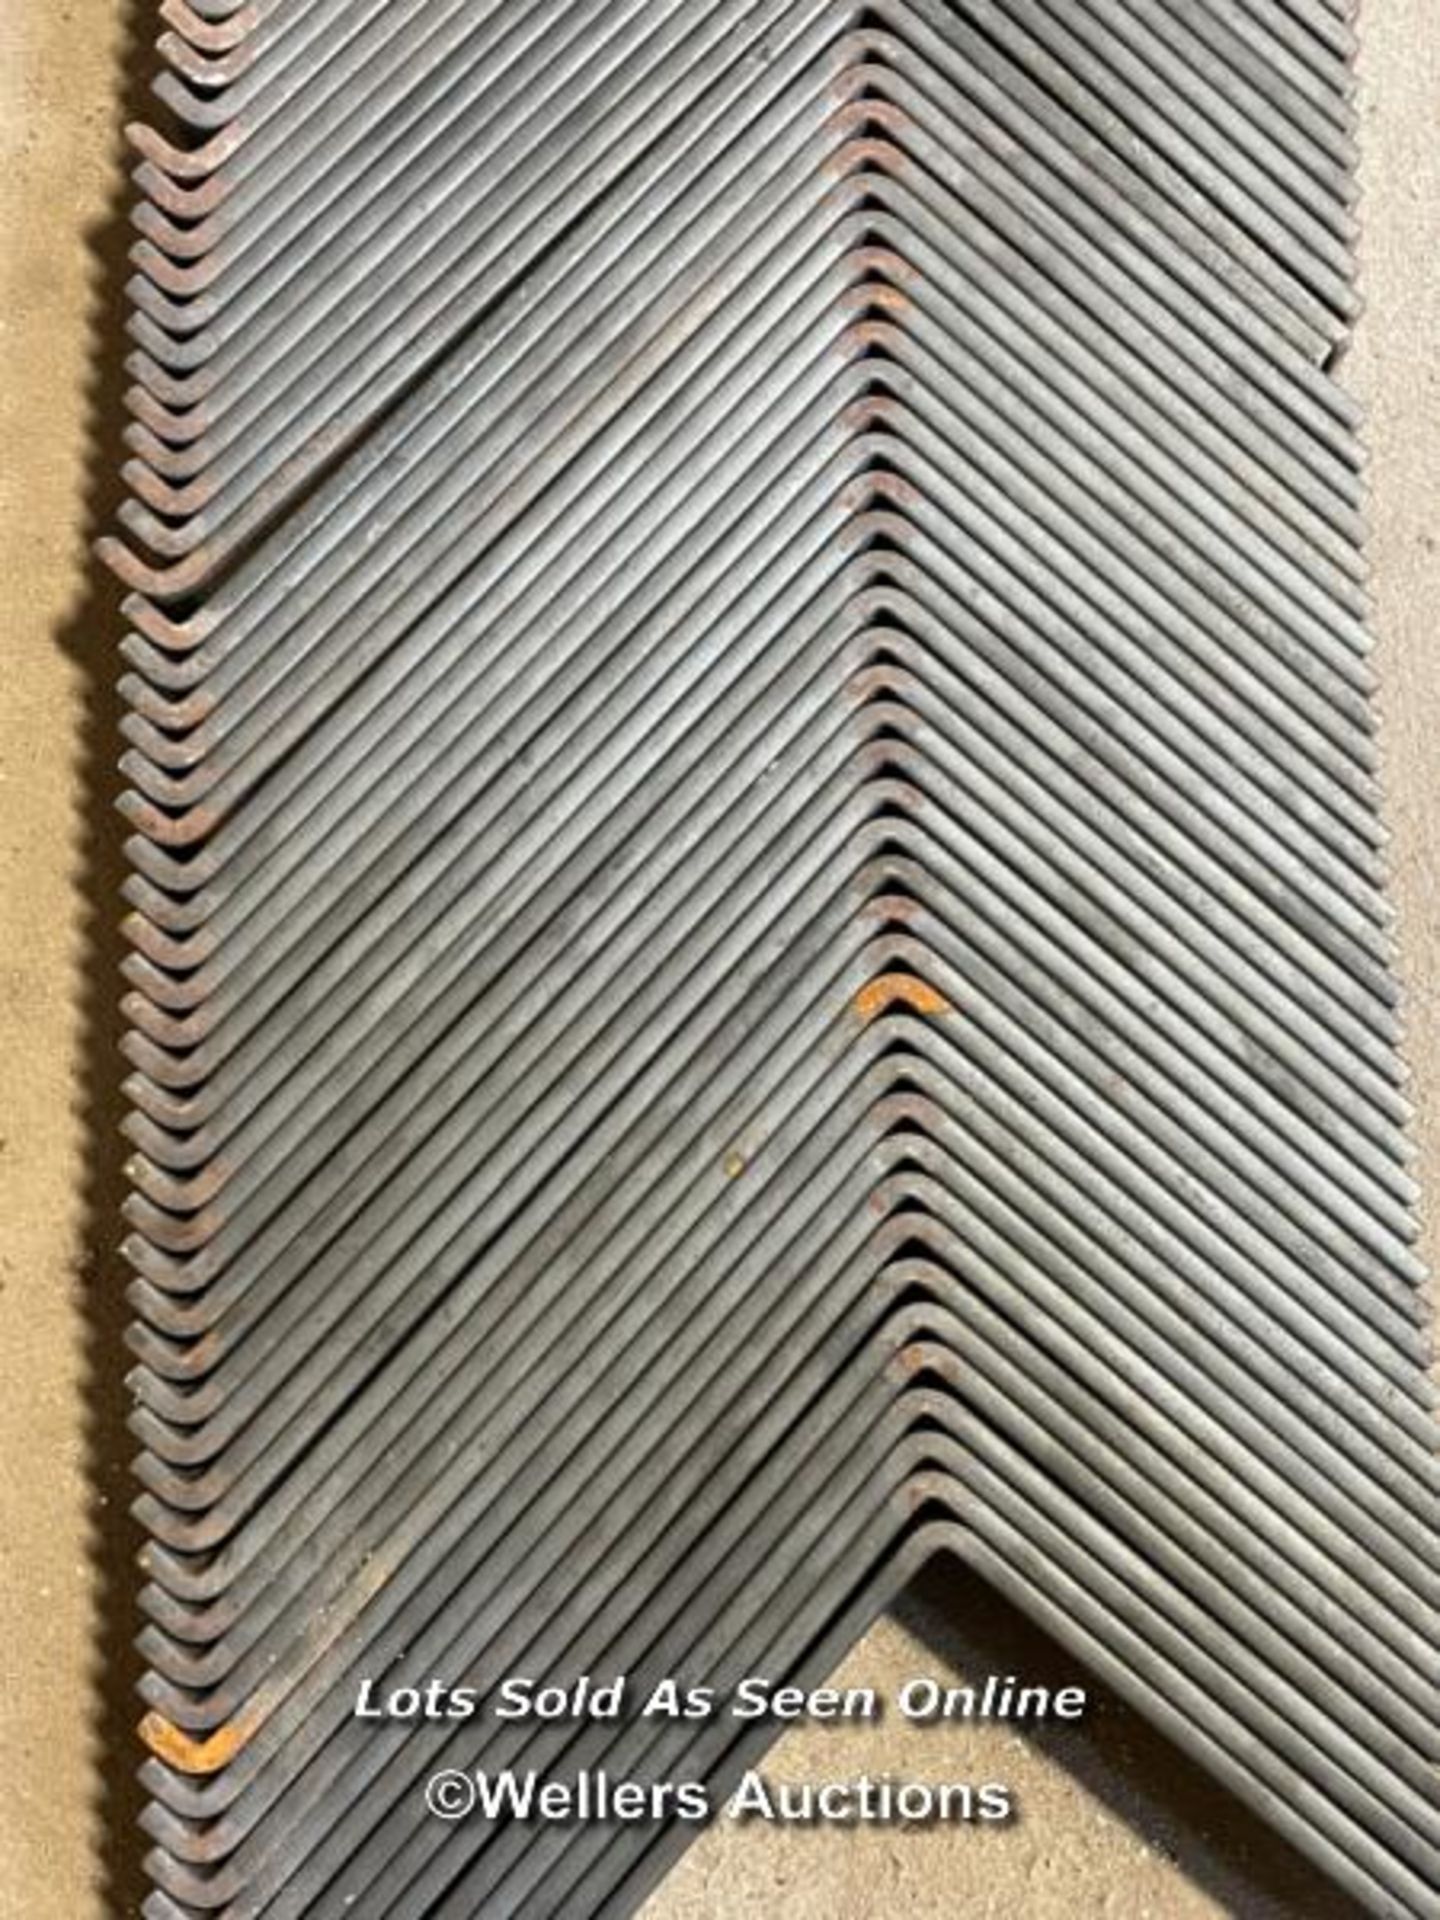 50 metal shelf brackets. 23cm x 15.5cm x 4cm for scaffold boards or other shelving